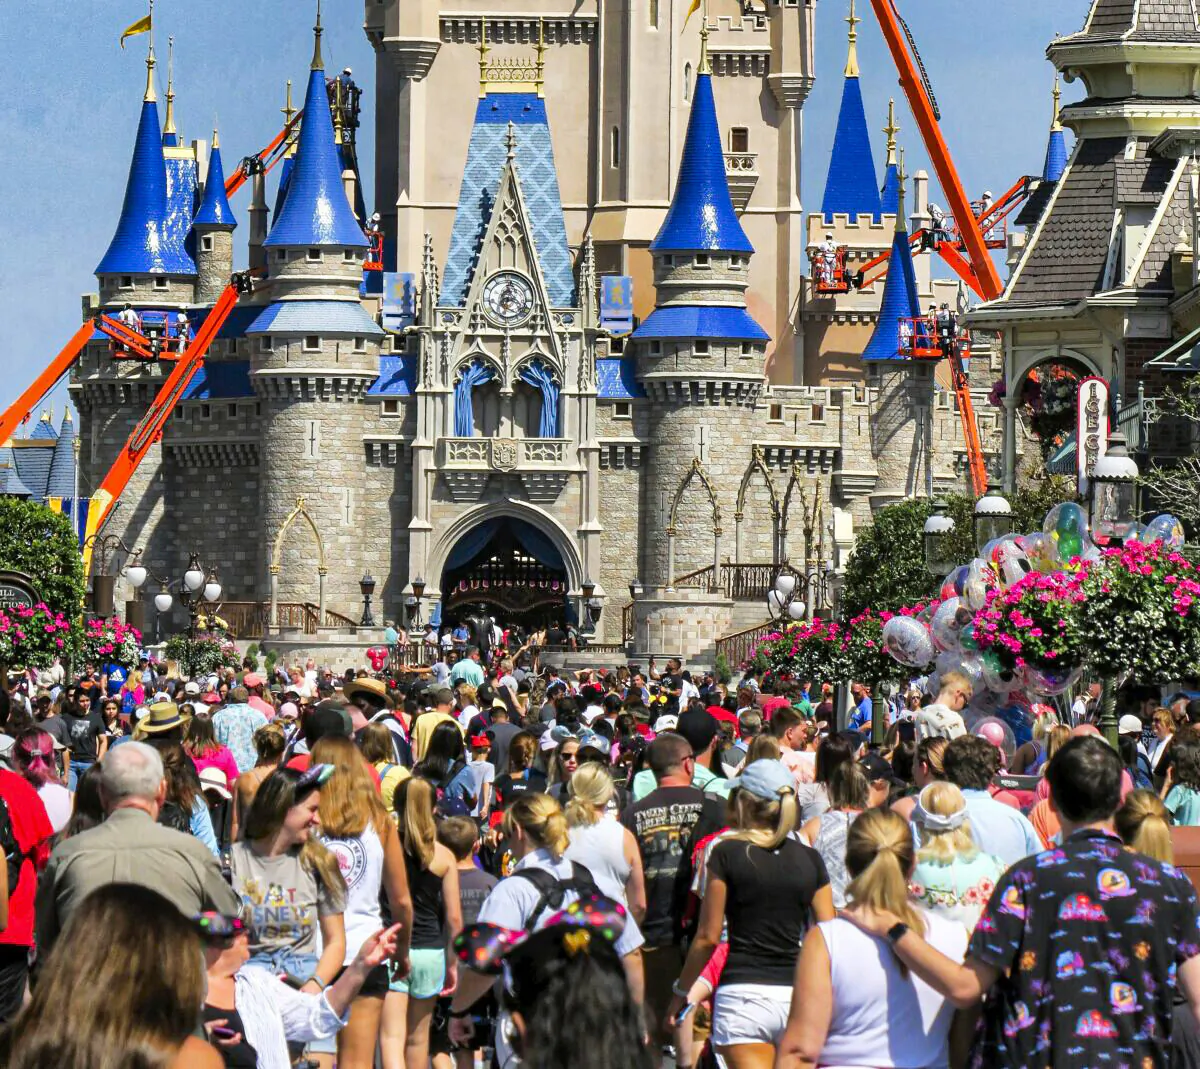 In this March 12, 2020, file photo, a crowd is shown along Main Street USA in front of Cinderella Castle in the Magic Kingdom at Walt Disney World in Lake Buena Vista, Fla. (Joe Burbank/Orlando Sentinel via AP)